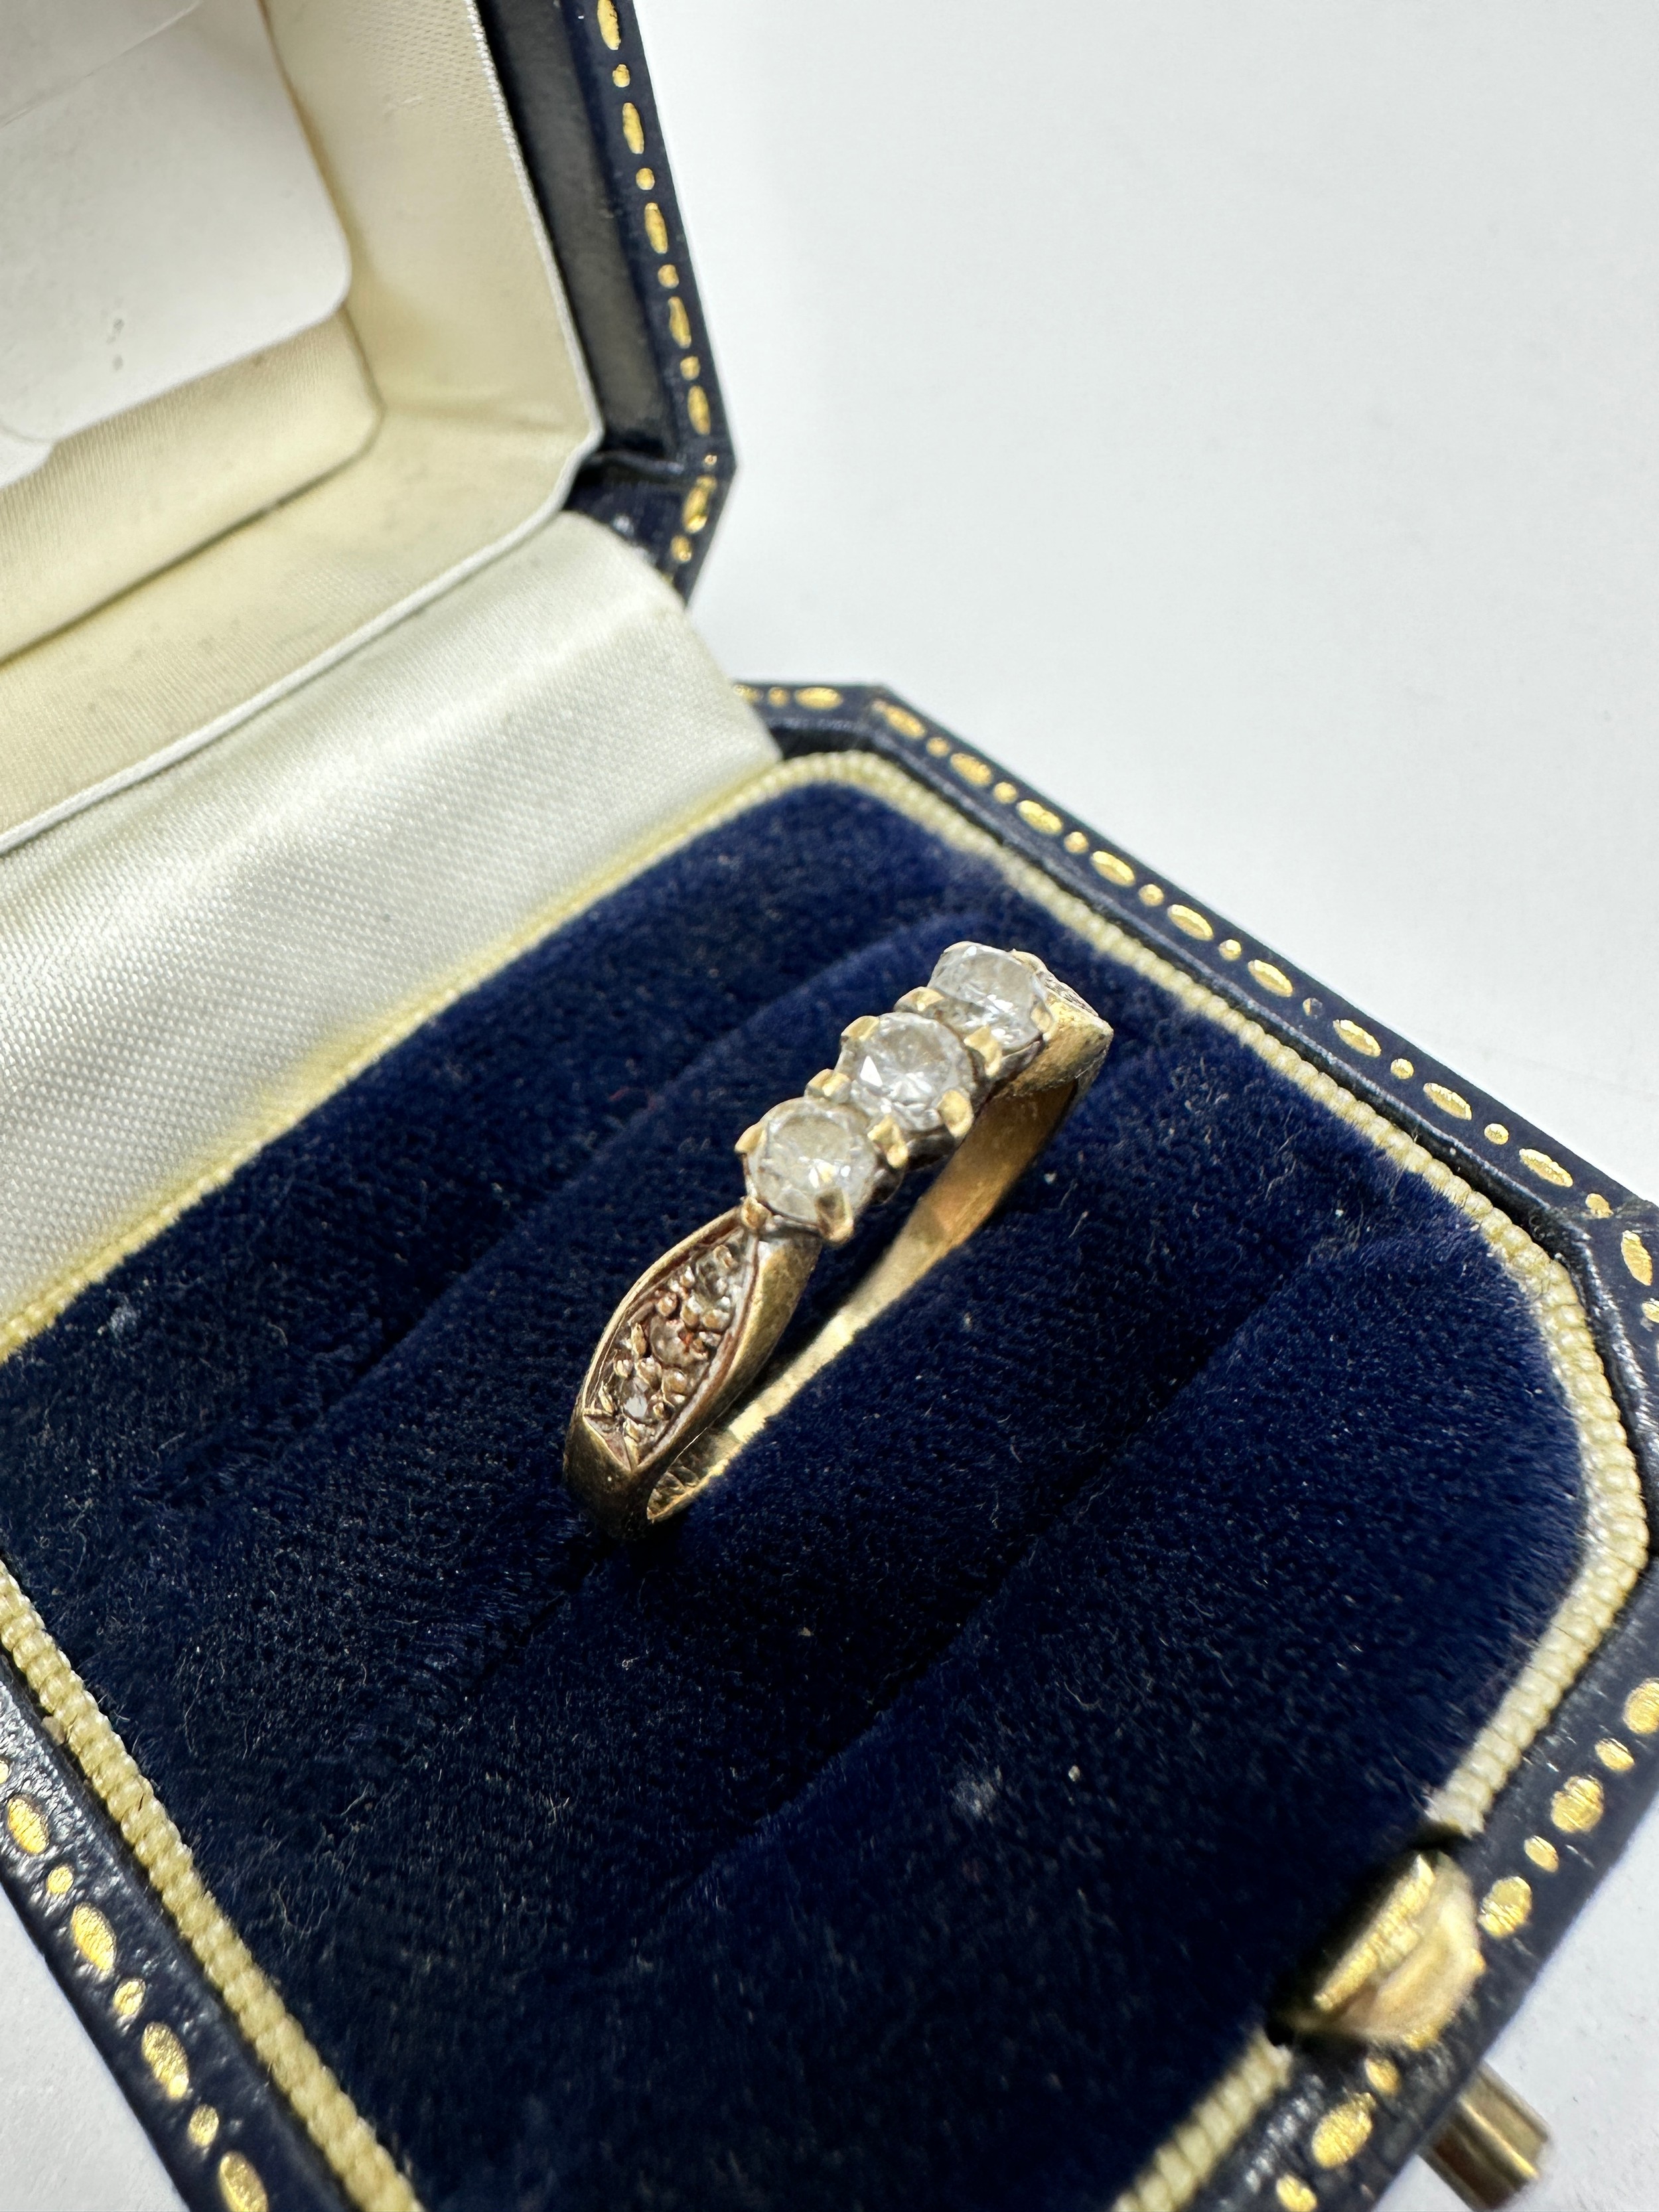 9ct gold diamond ring (2.3g) 0.33ct diamonds - Image 2 of 3